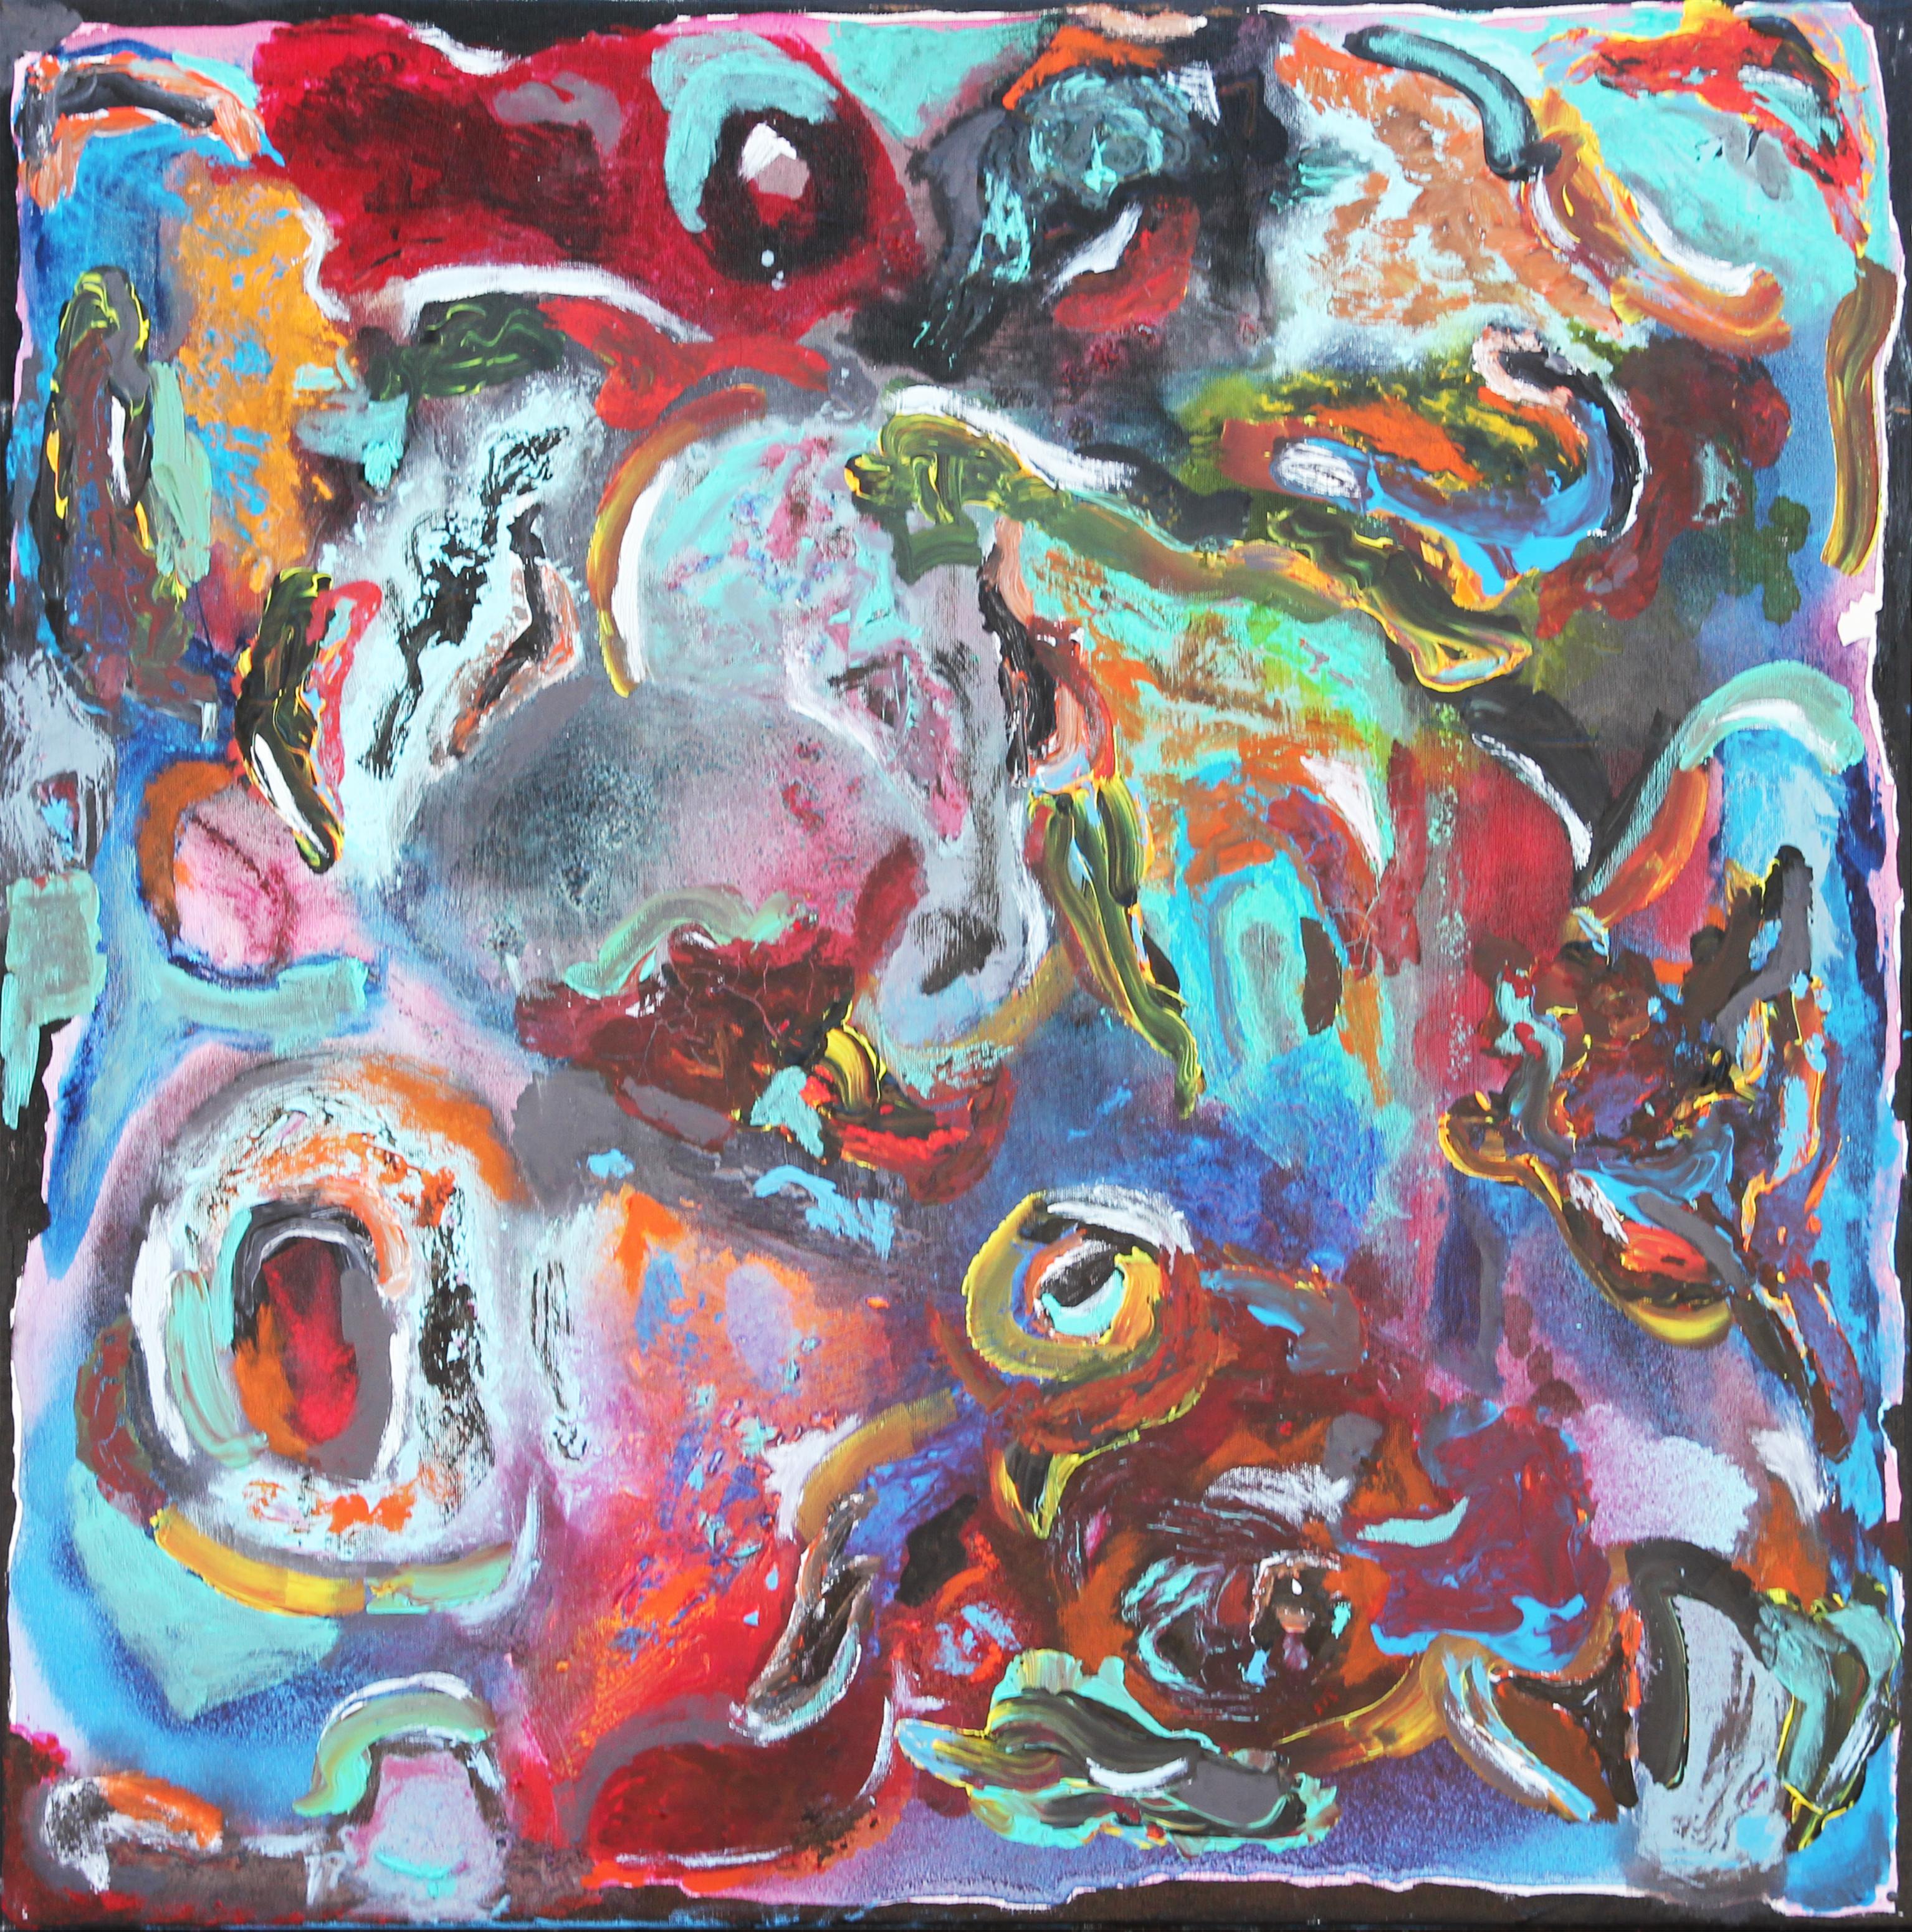 Paul Reeves Abstract Painting – ""Night Sounds" Hellblaues, rotes und orangefarbenes abstraktes Gemälde mit bunten Wirbeln